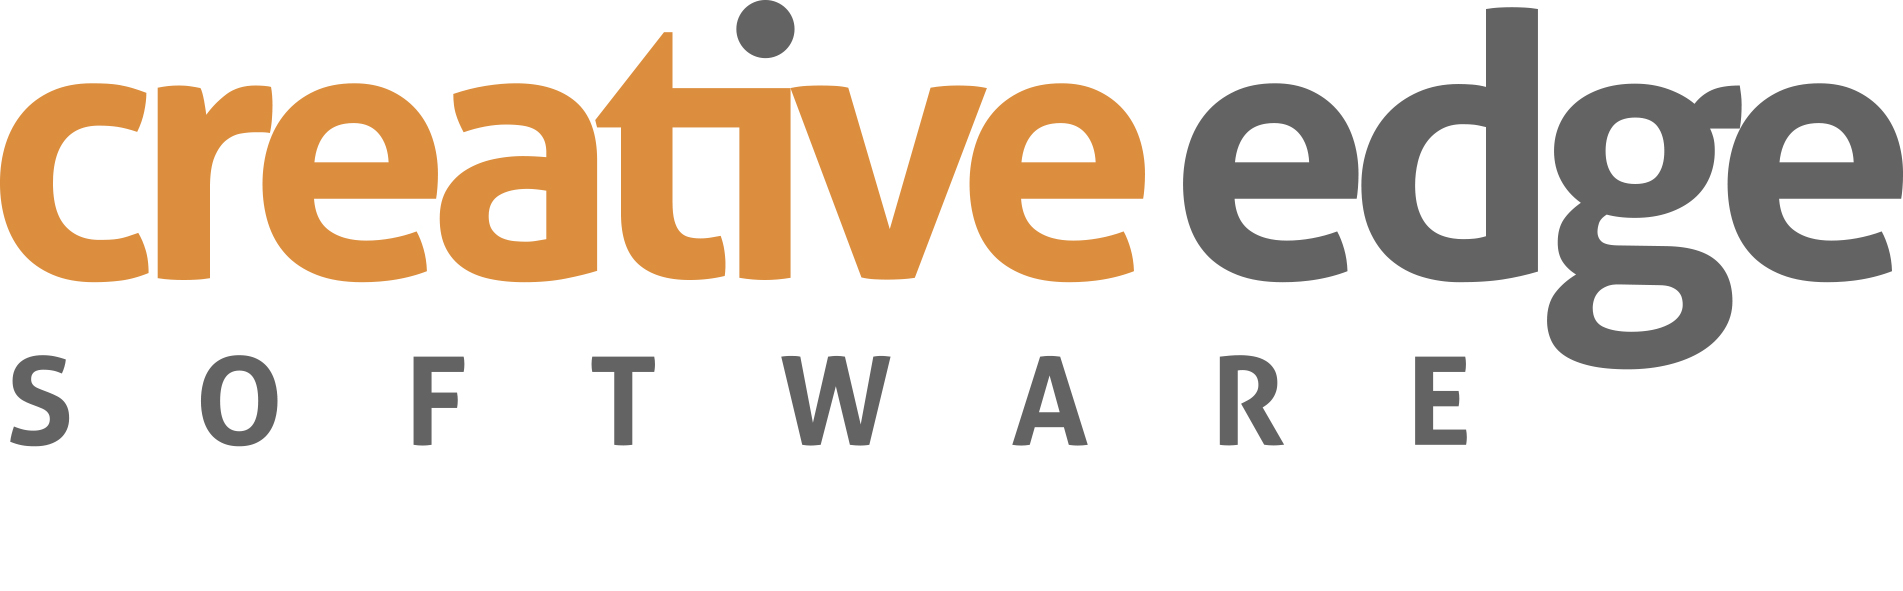 Creative Edge Software company logo.